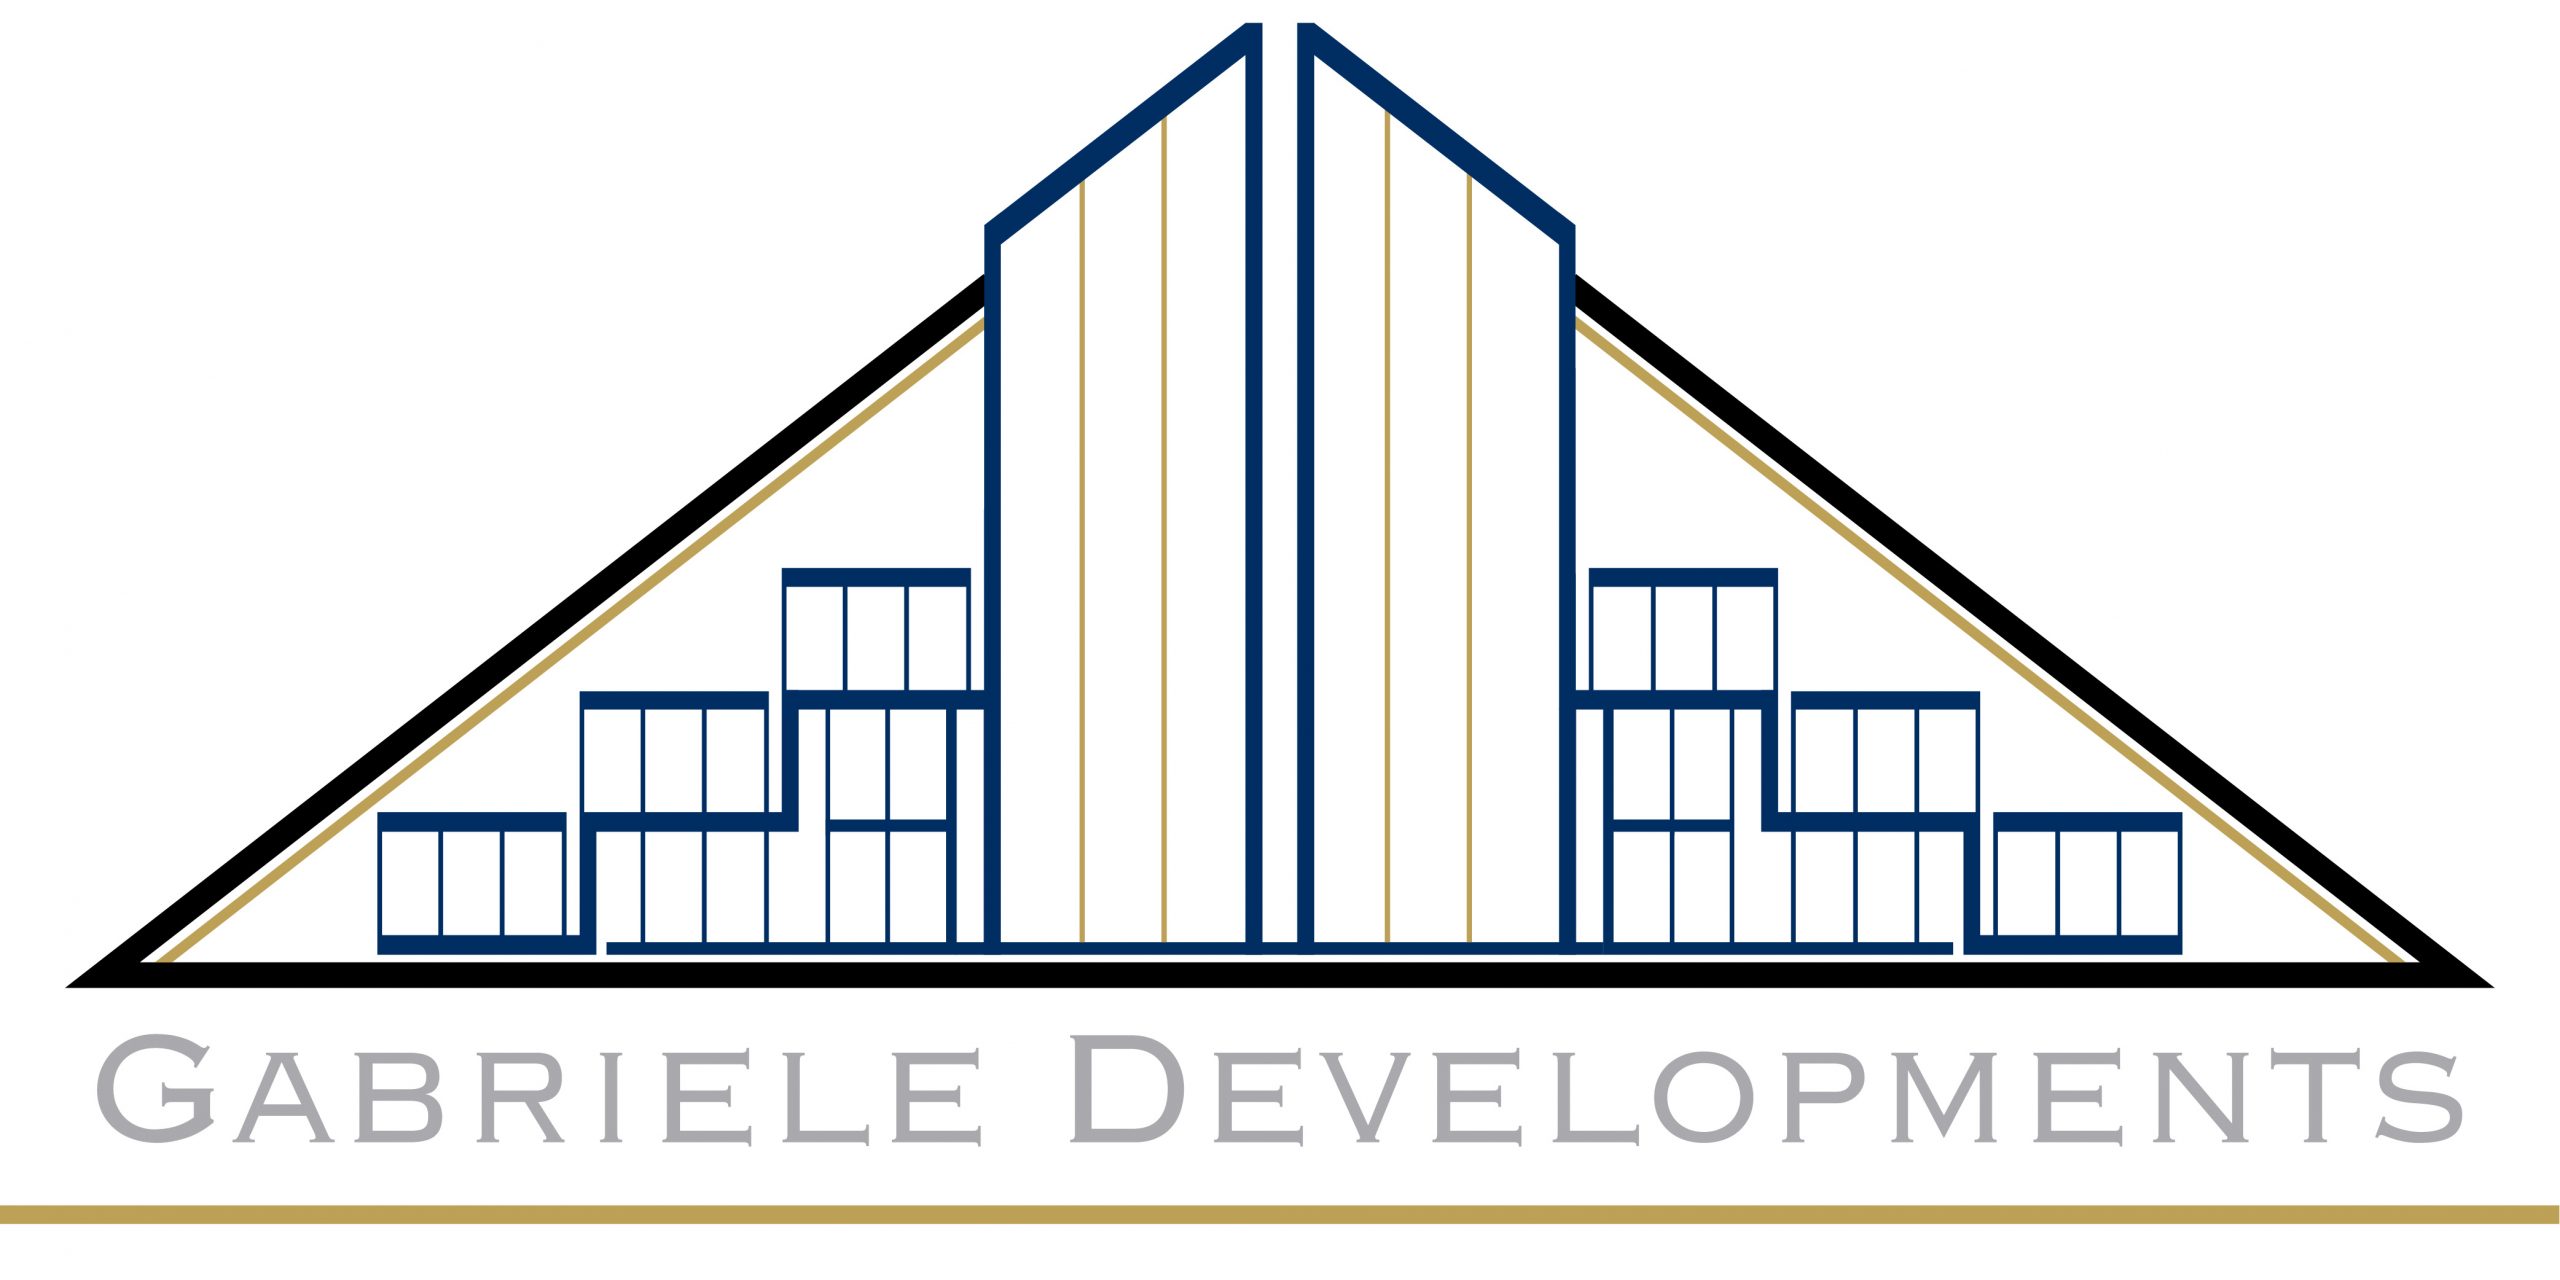 Gabriele Development Limited